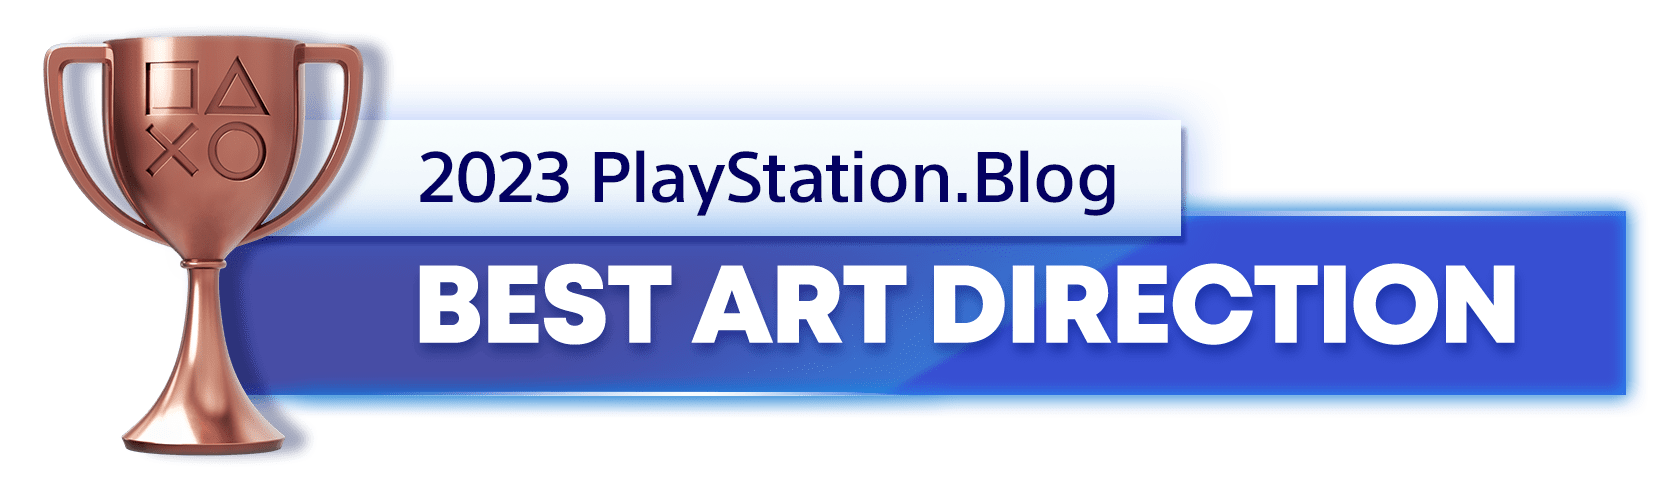 Bronze Trophy for the 2023 PlayStation Blog Best Art Direction Winner